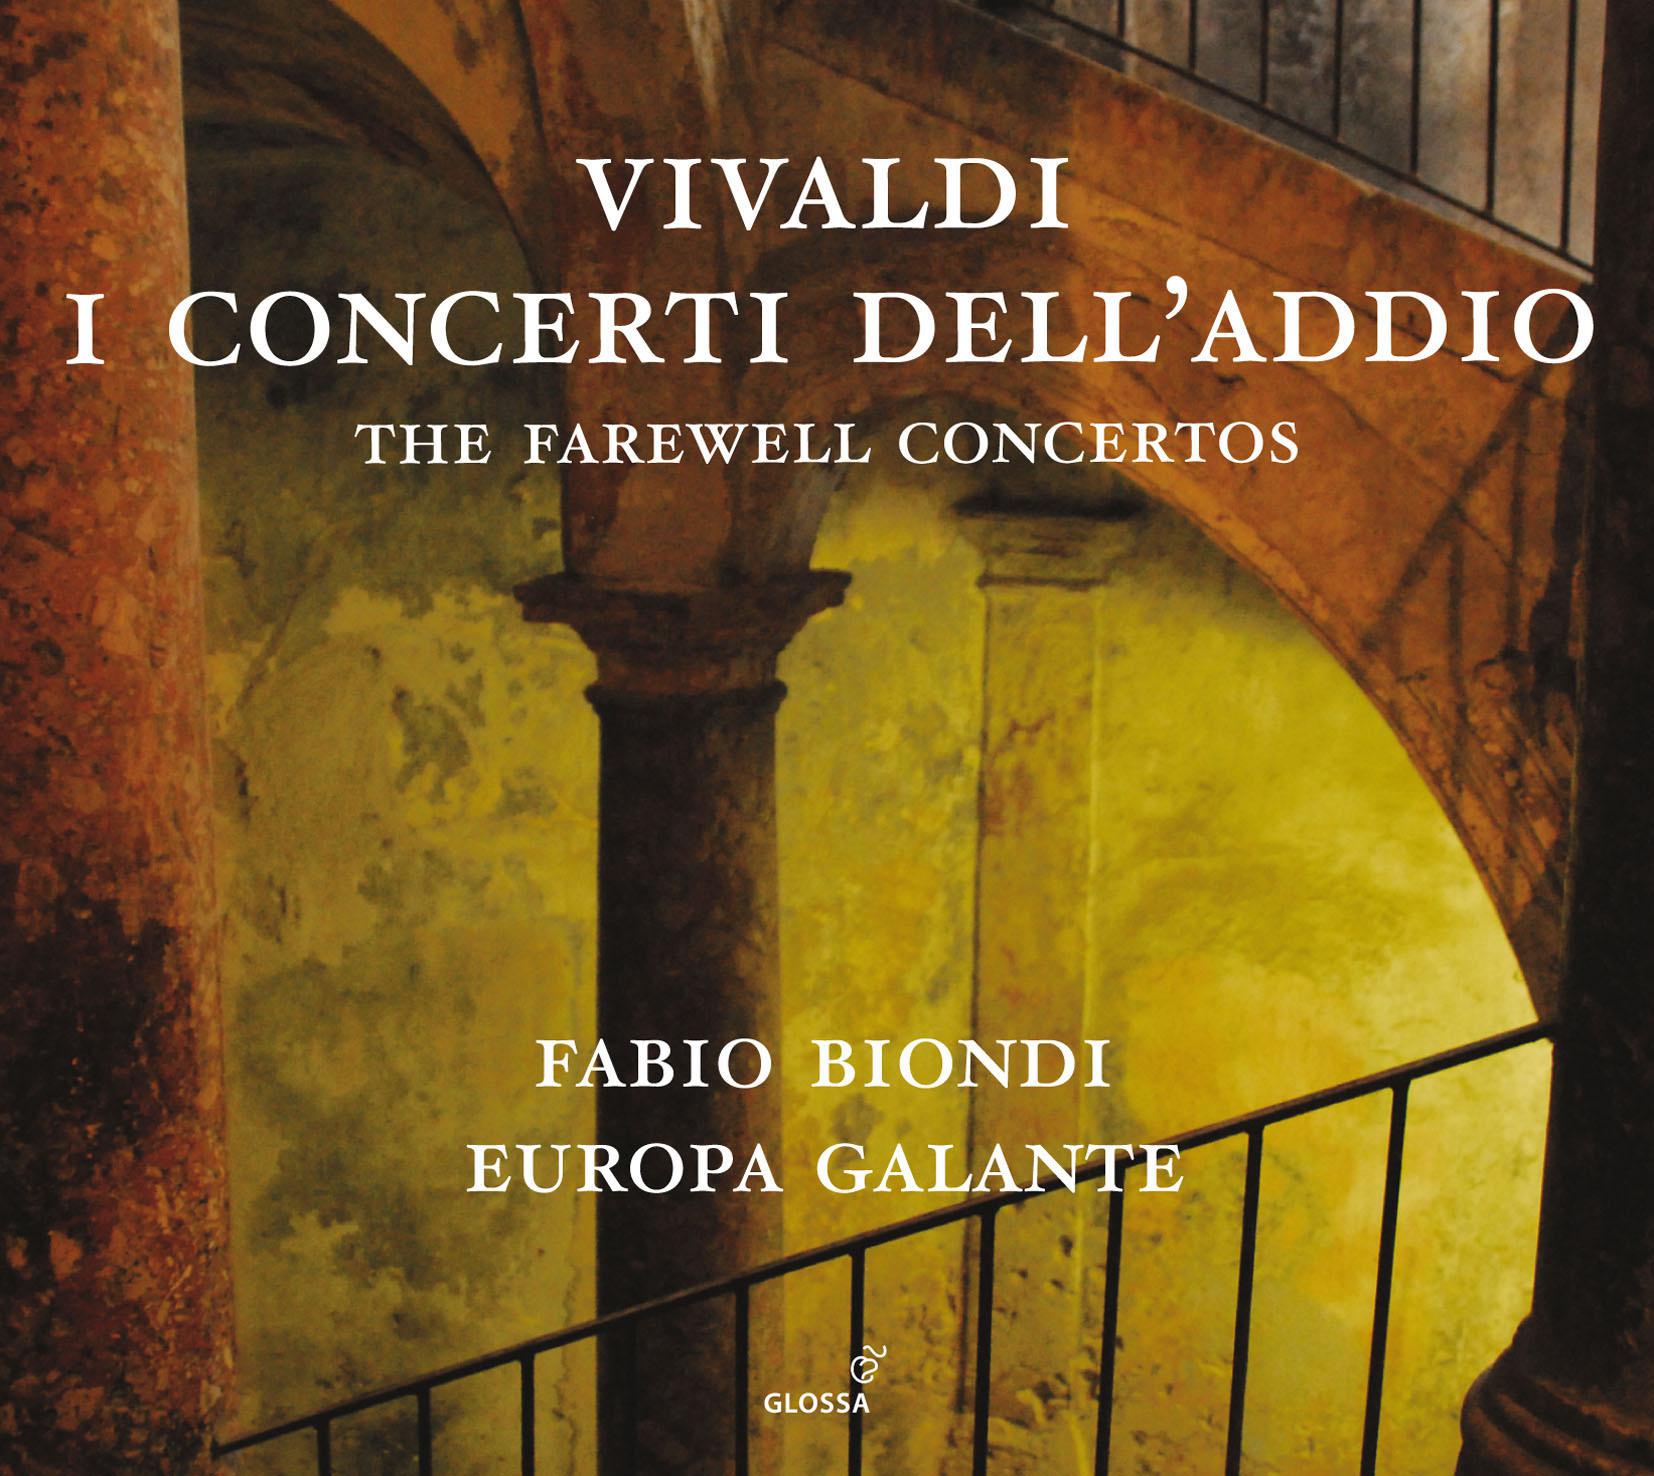 Violin Concerto in B-Flat Major, RV 371: II. Larghetto